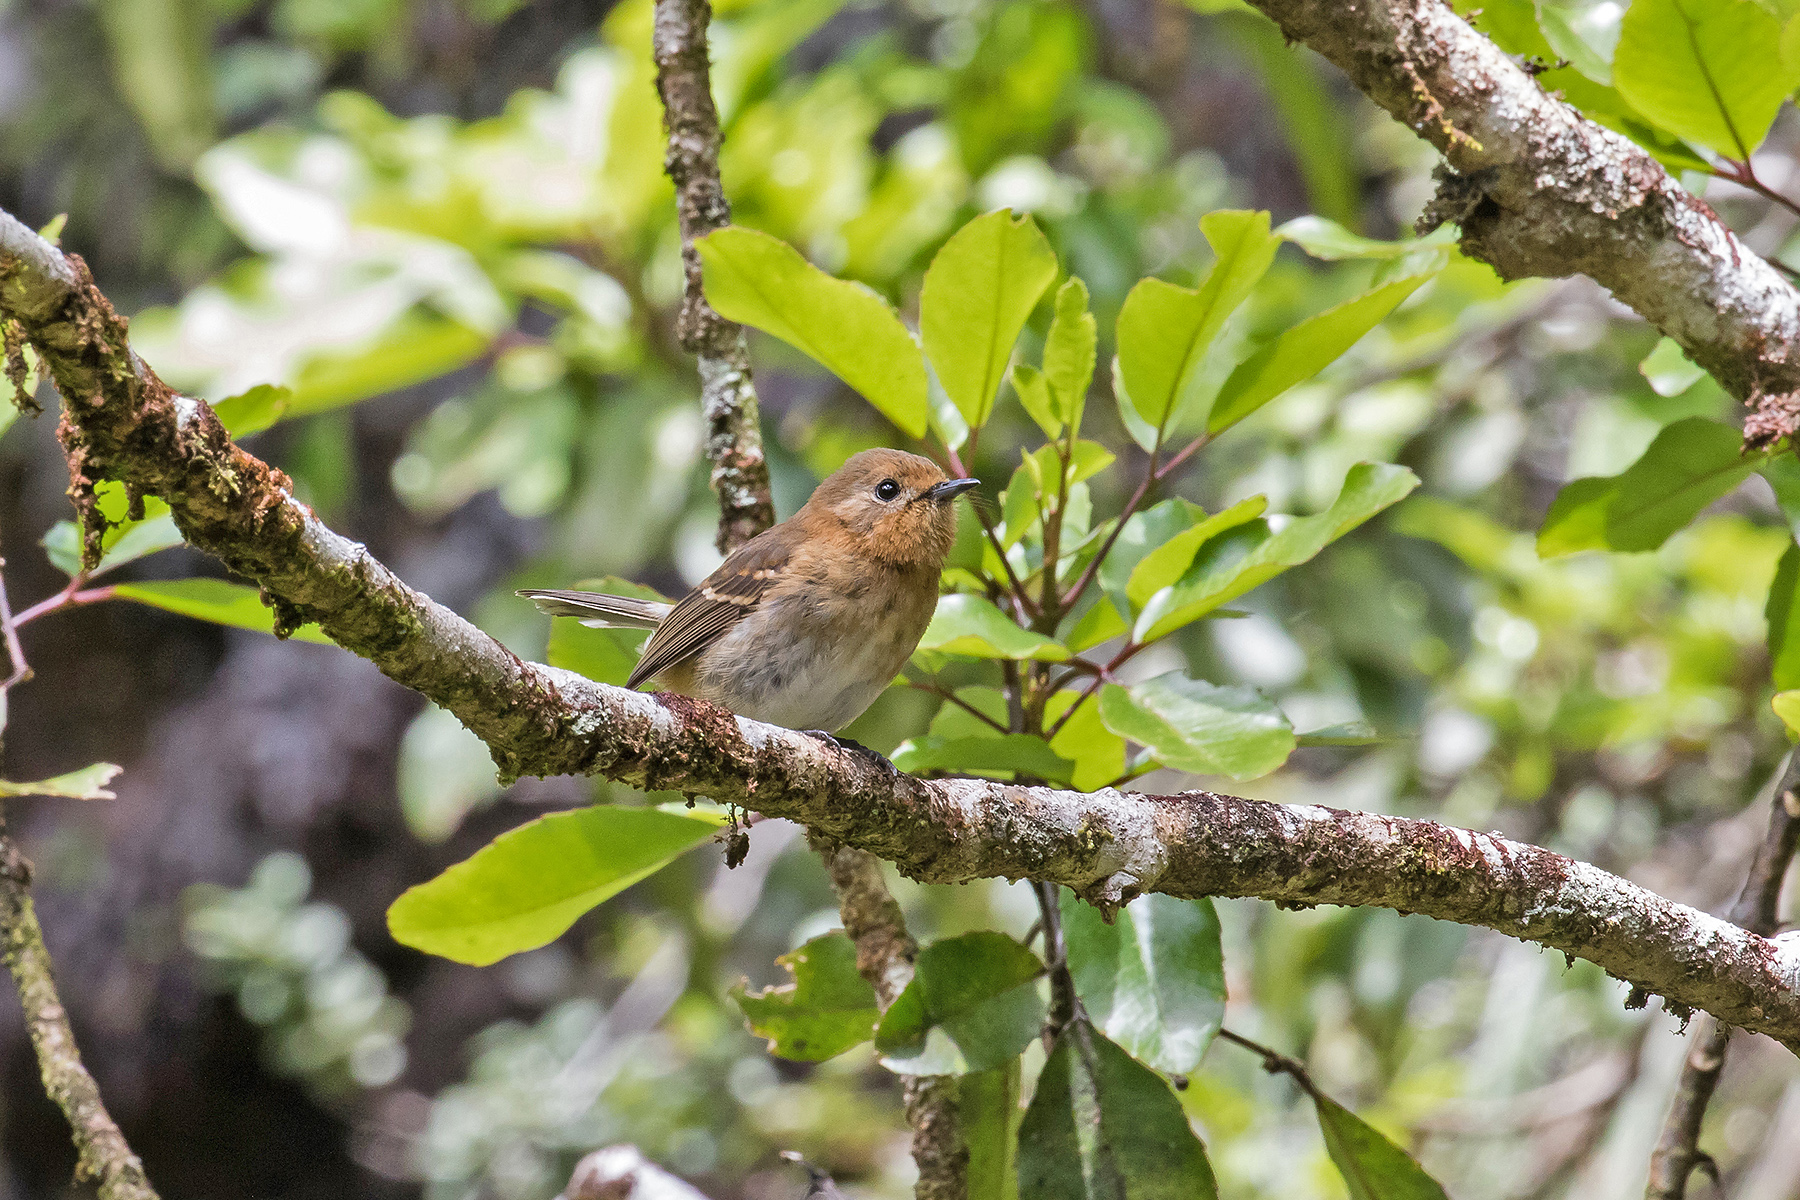 Kauai Elepaio on our Hawaii birding tour (image by Pete Morris)